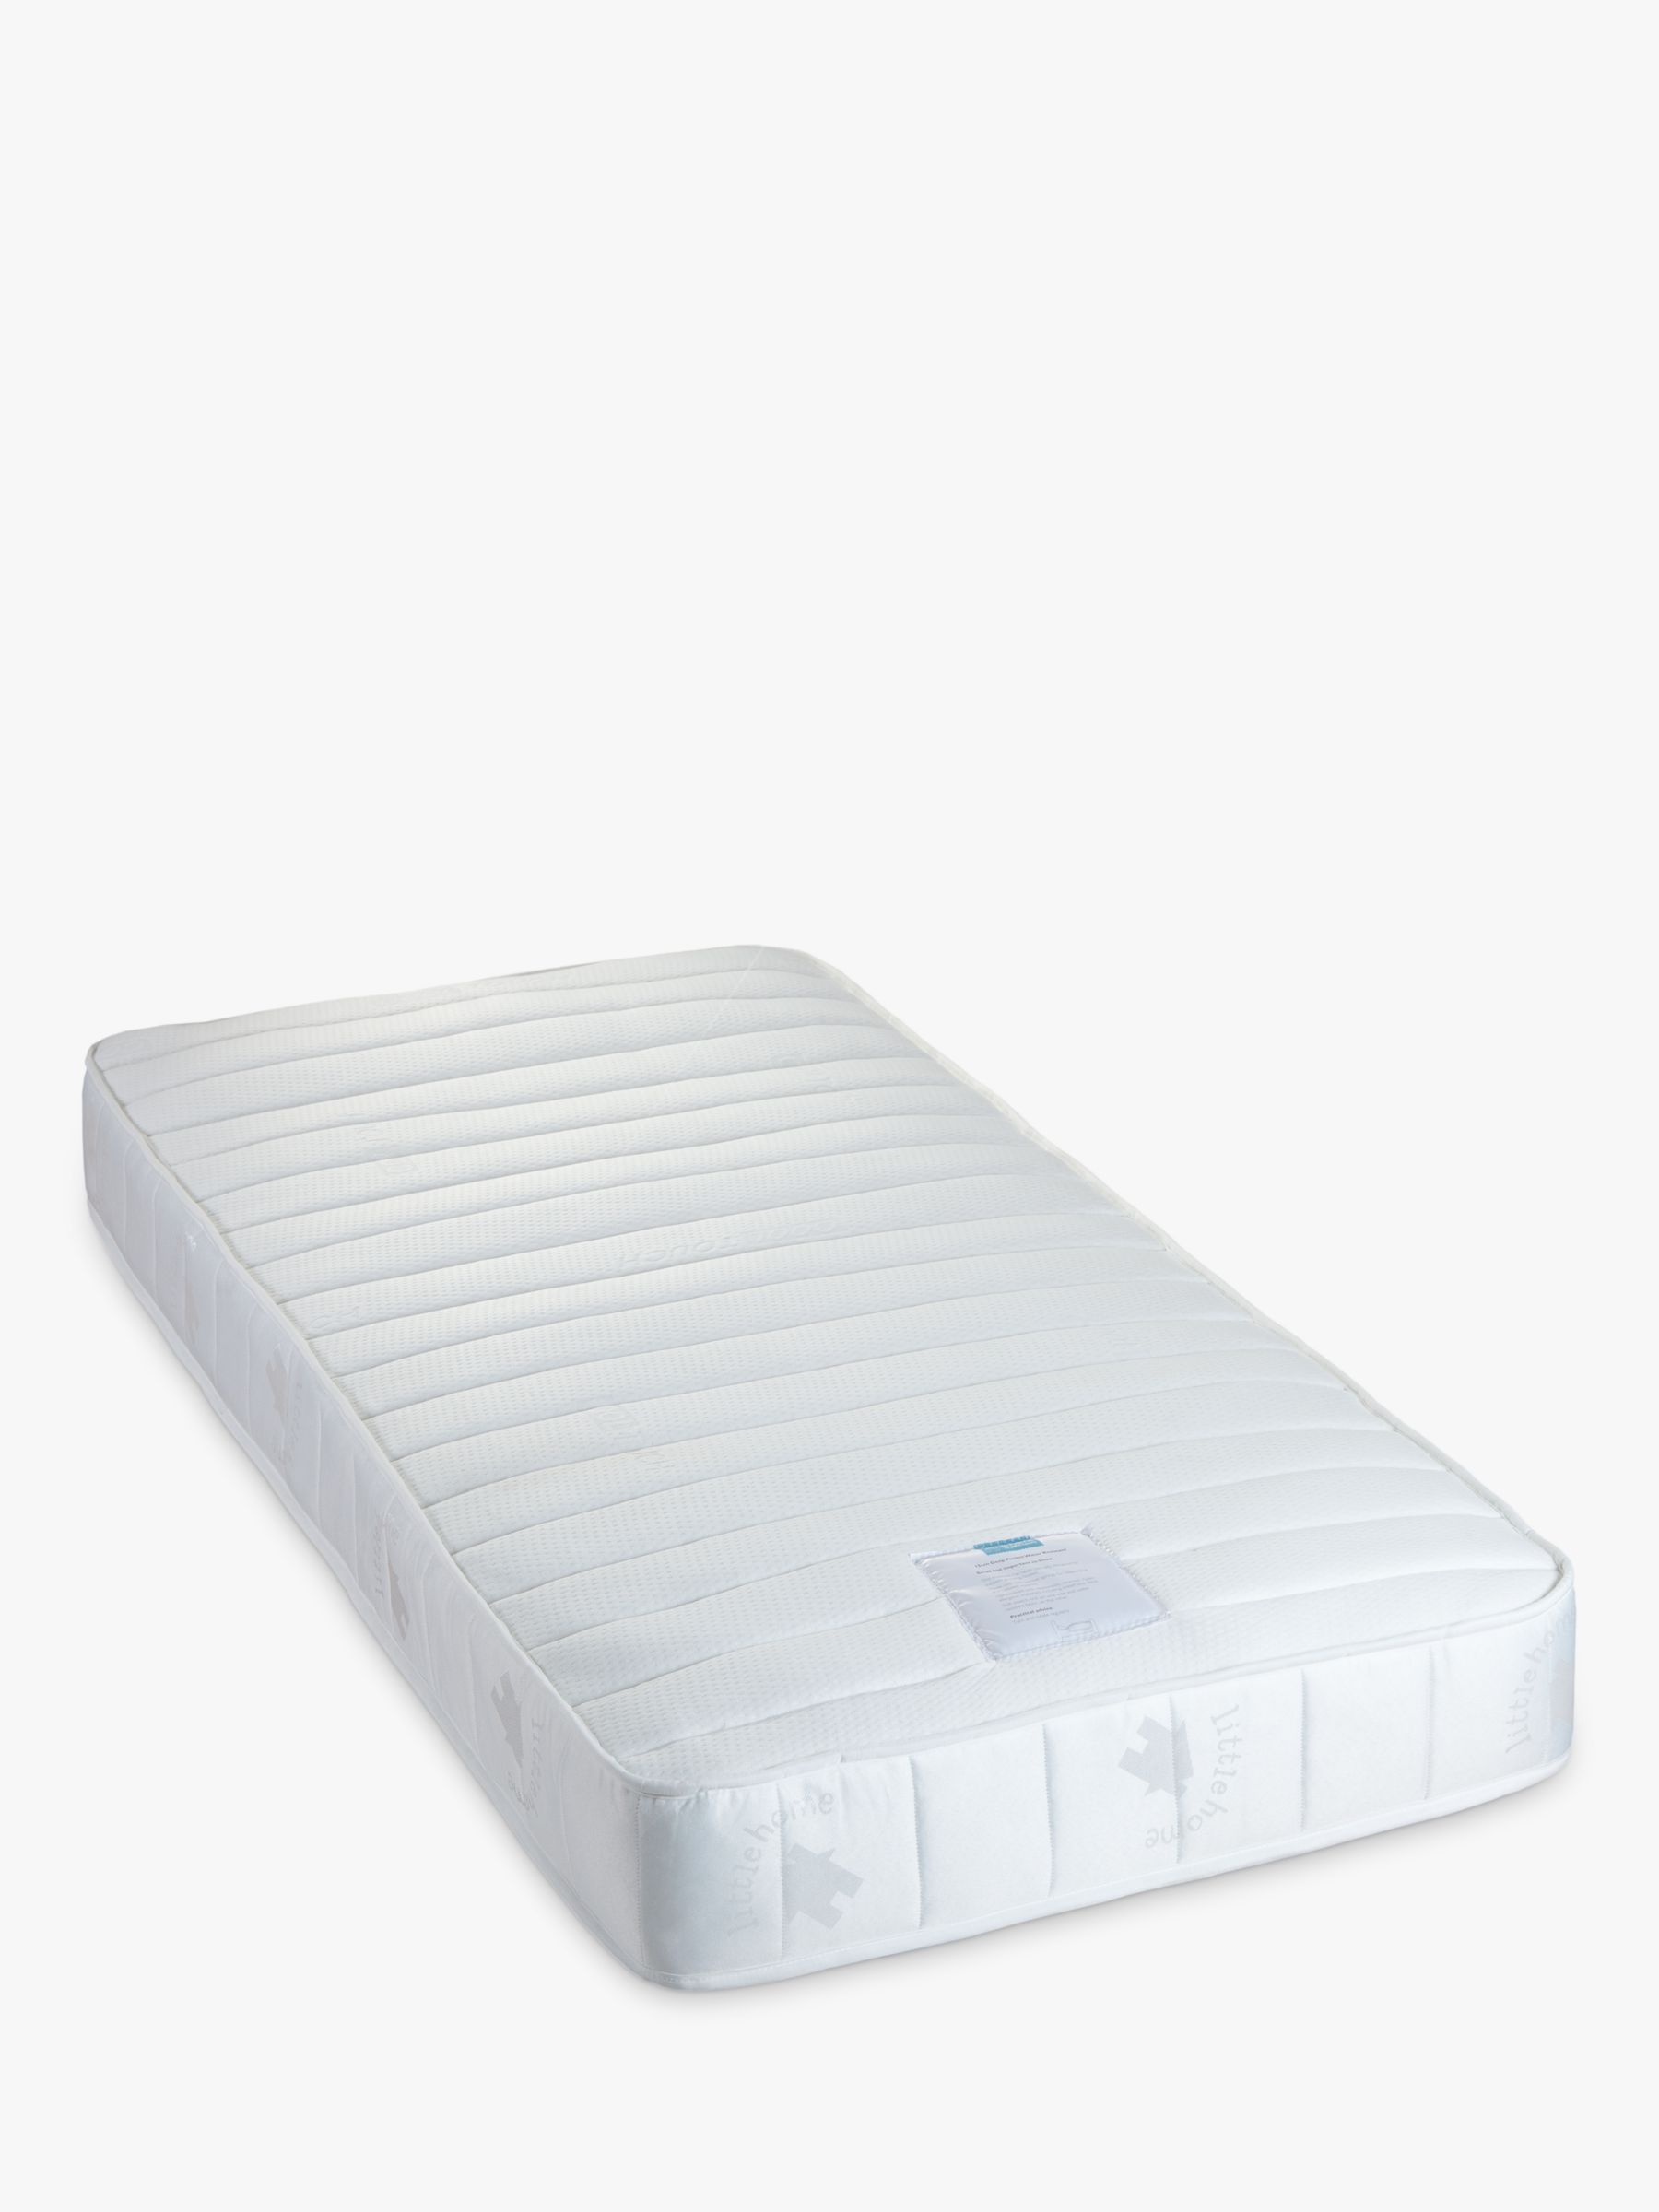 Photo of Little home at john lewis 15cm deep pocket spring water resistant bunk bed mattress medium single